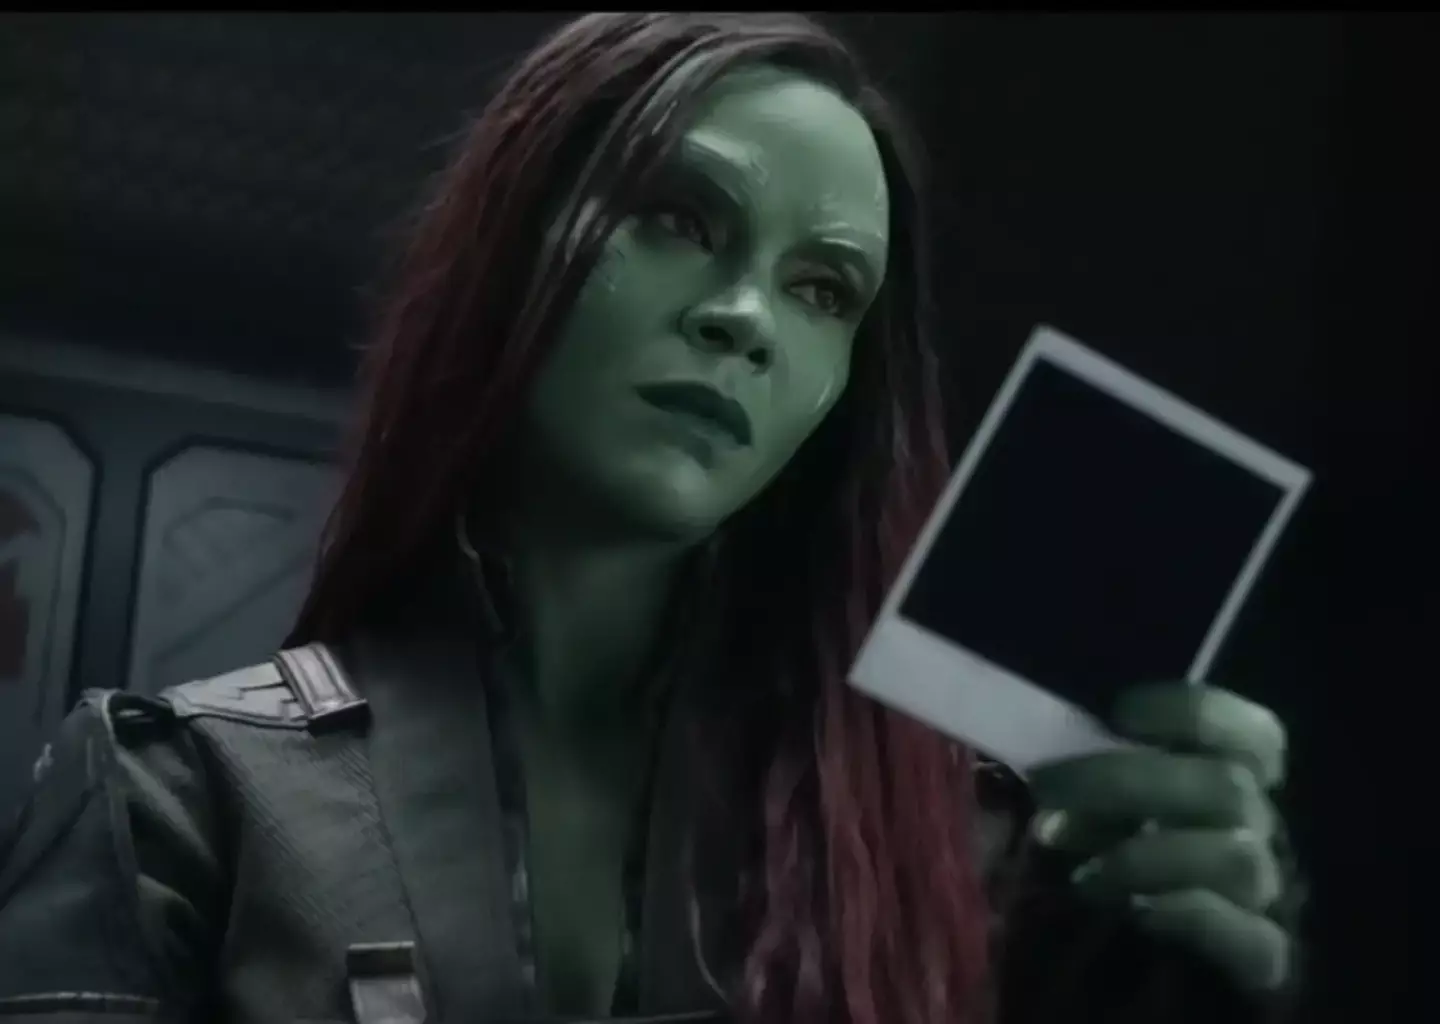 Saldana stars as Gamora in the MCU movies.